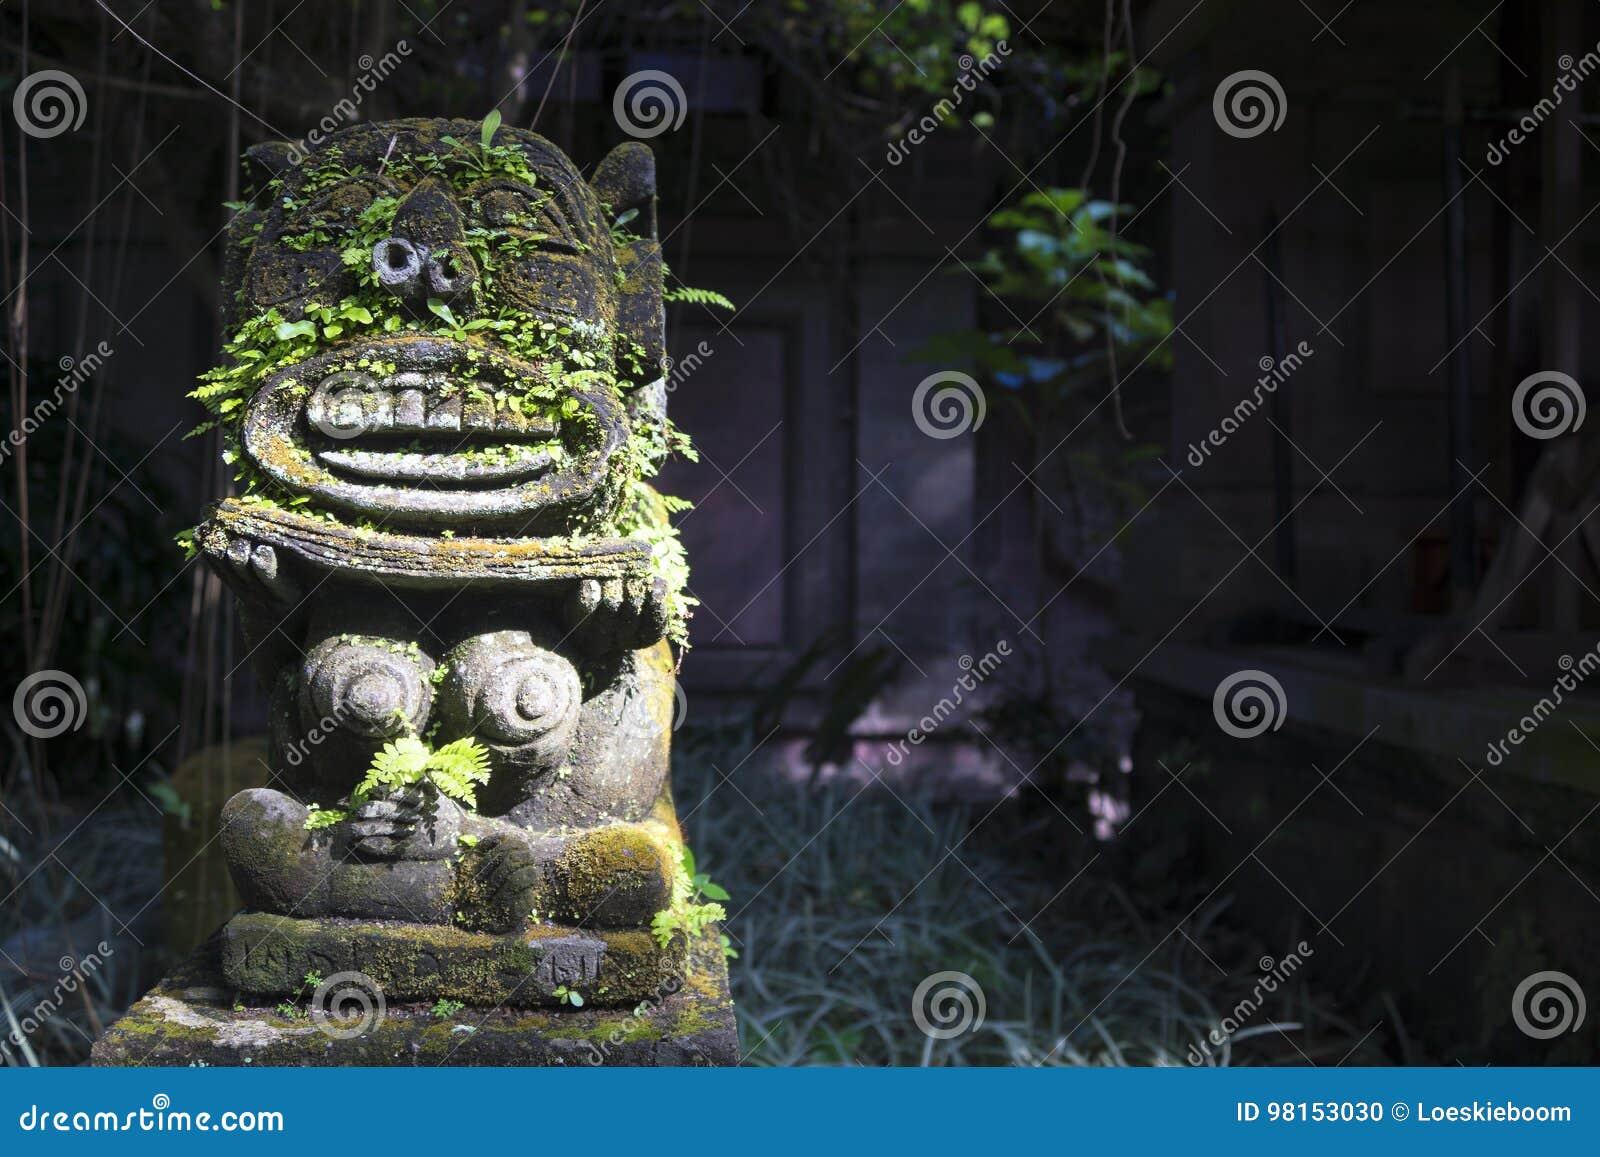 monkey spirit sculpture in arma museum on the left, ubud, bali, indonesia